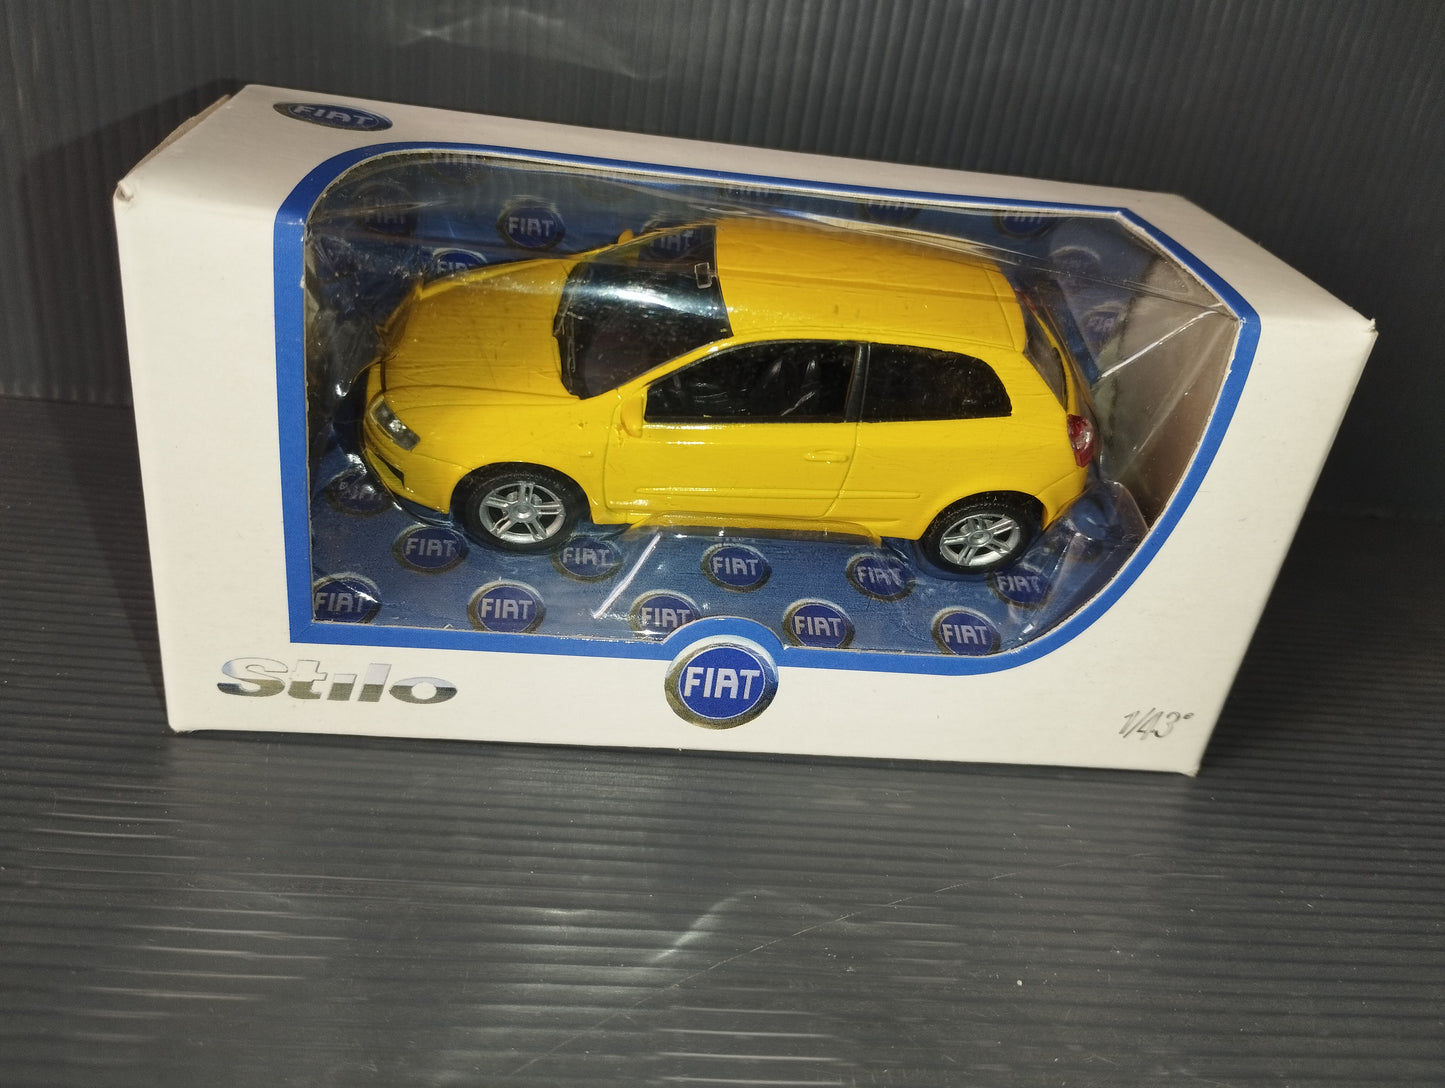 Copy of Fiat Stilo model

 Produced by Norev

 Scale 1:43